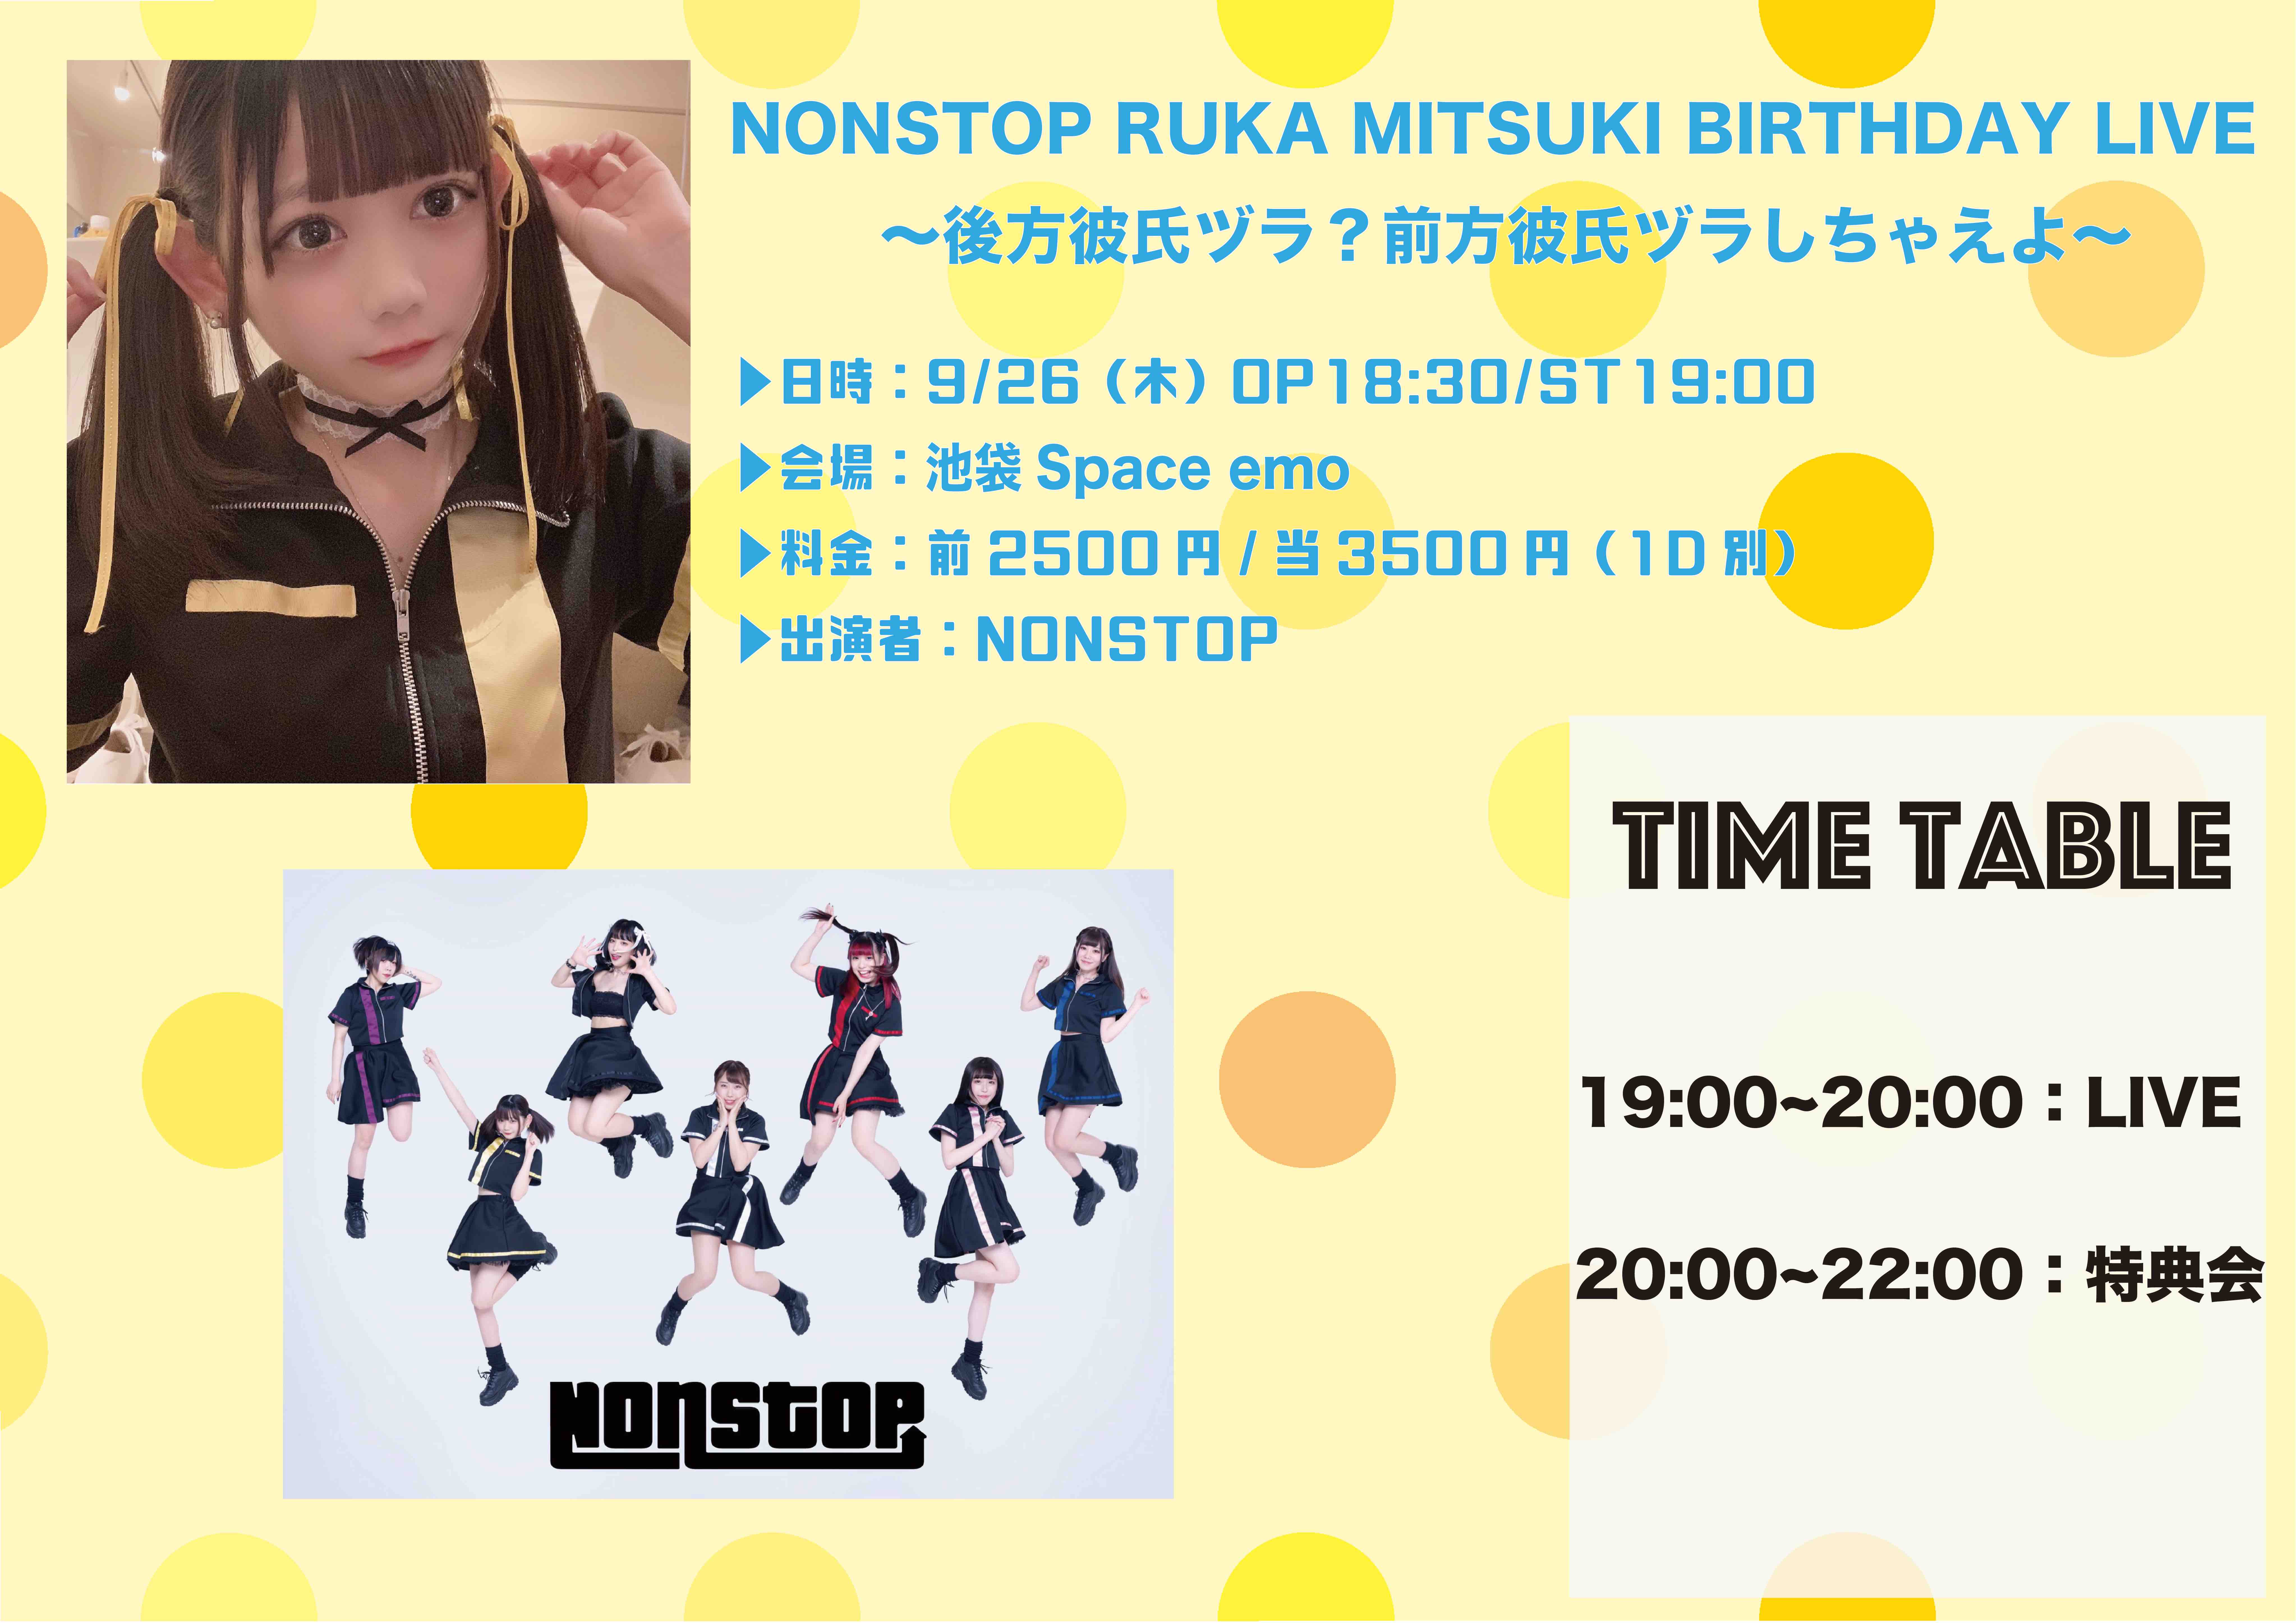 Nonstop Ruka Mitsuki Birthday Live 後方彼氏ヅラ 前方彼氏ヅラ しちゃえよ のチケット情報 予約 購入 販売 ライヴポケット